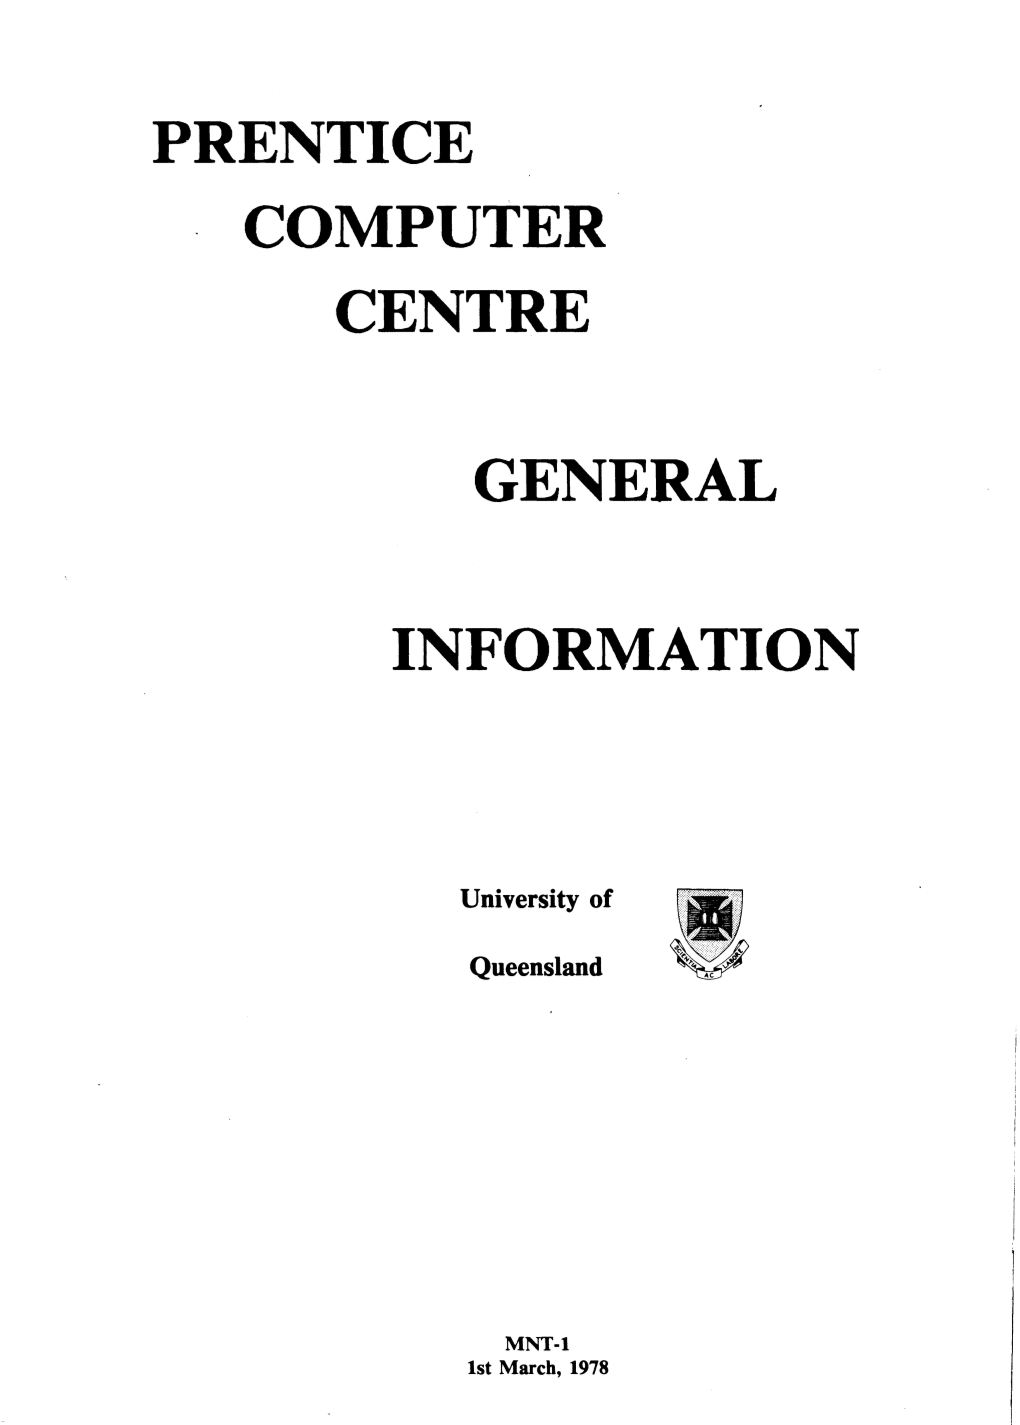 Prentice Computer Centre General Information